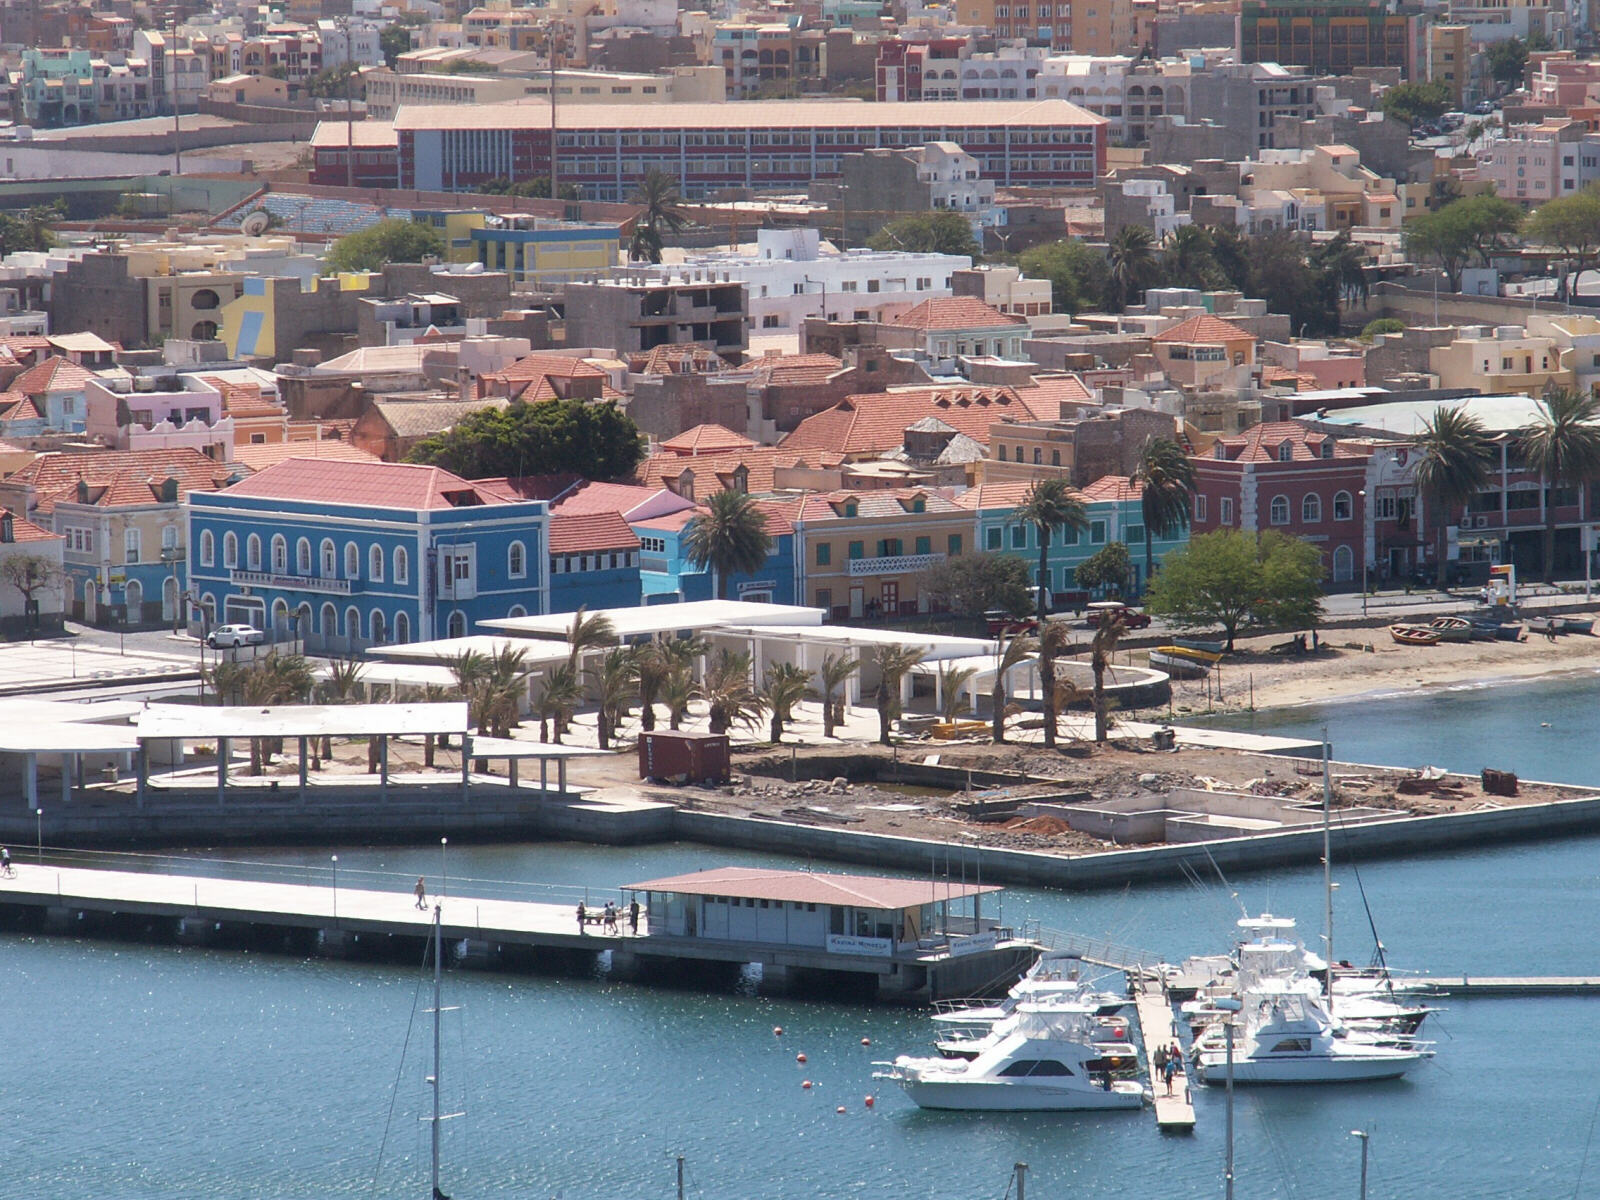 The harbour at Mindelo, Cape Verde